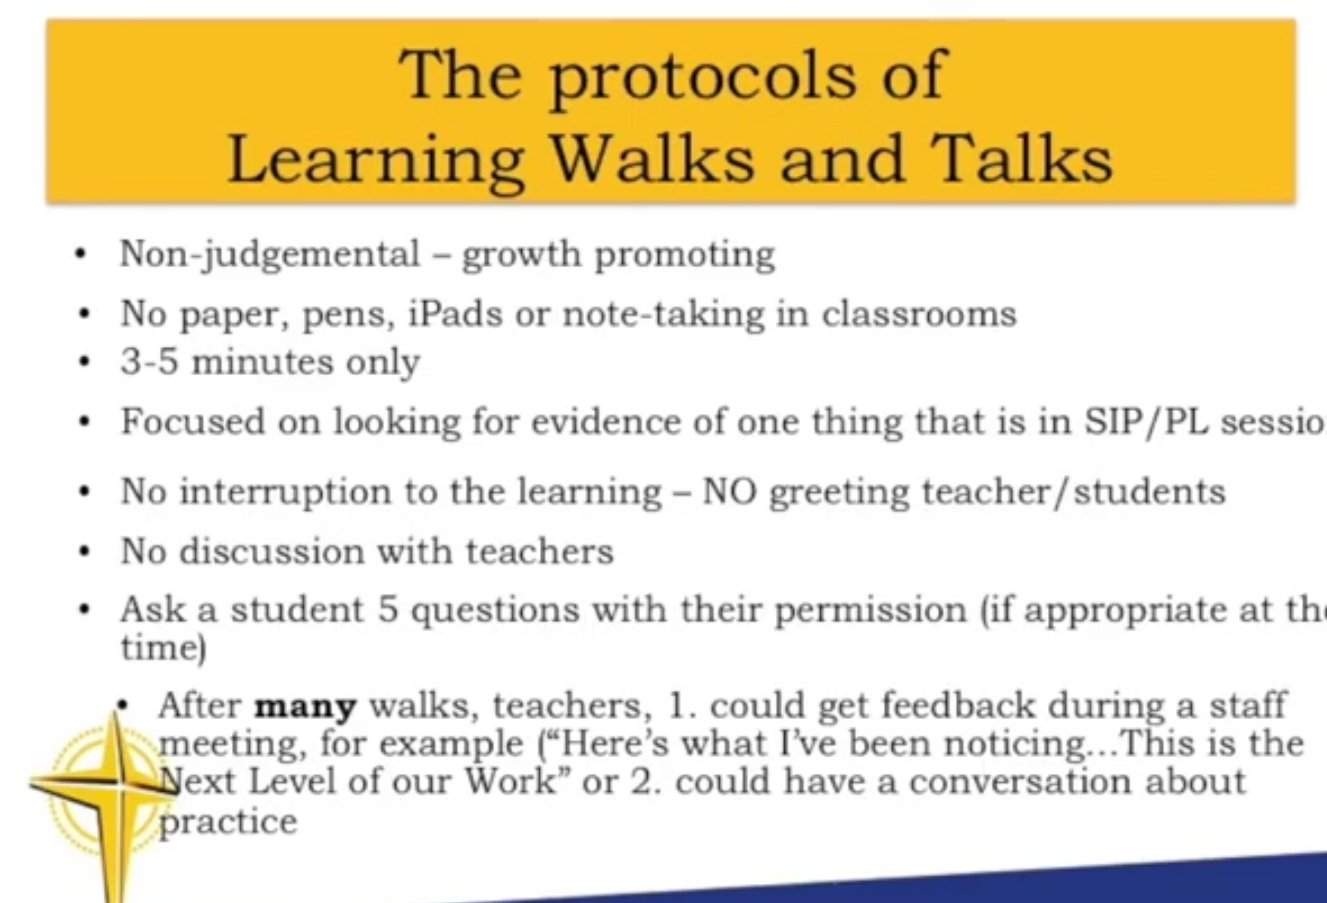 Learning walk protocols